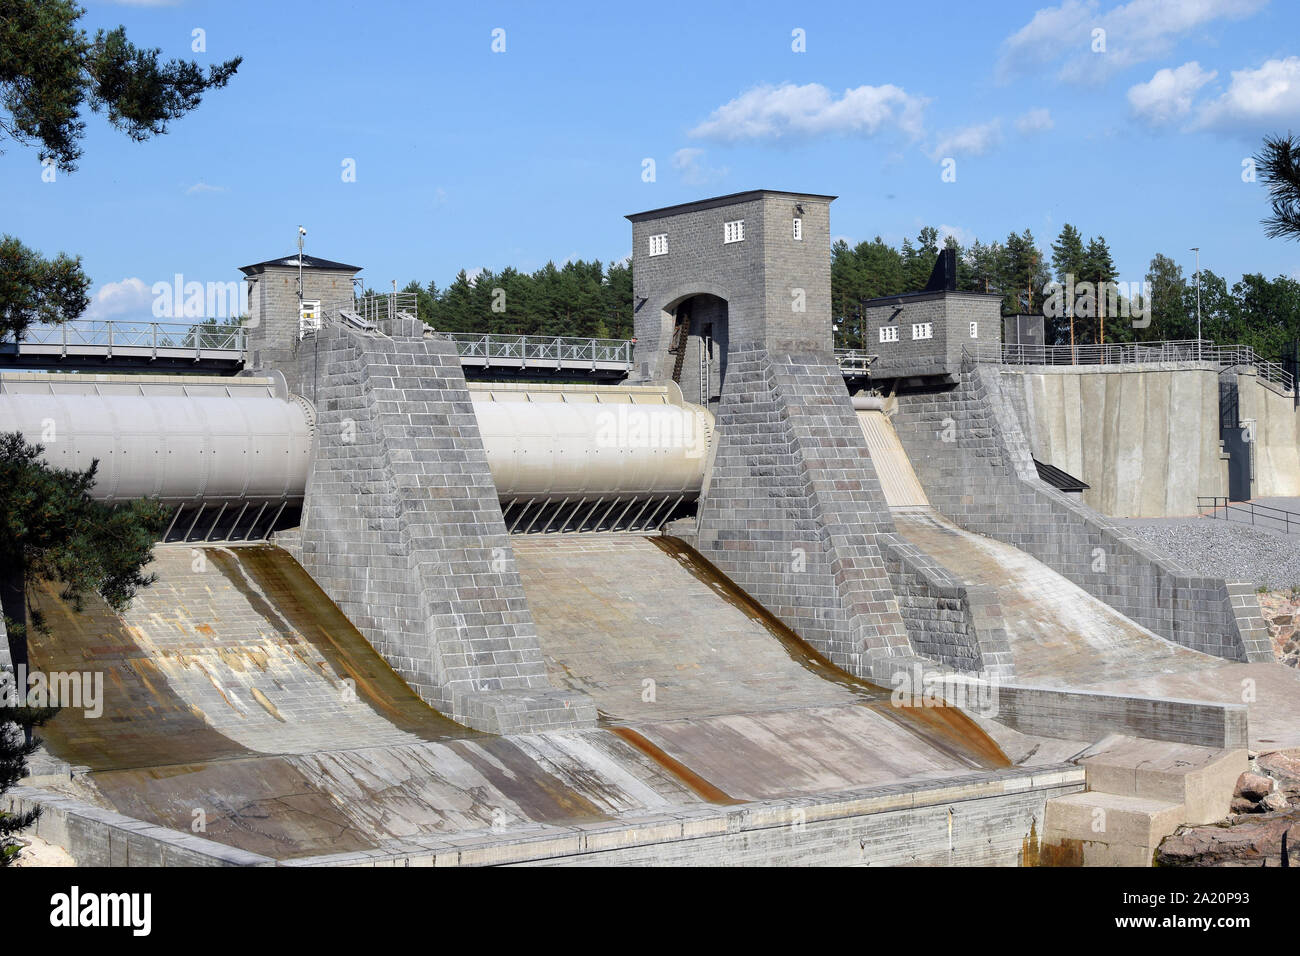 Imatra hydroelectric powerplant dam sluice gates closed Stock Photo